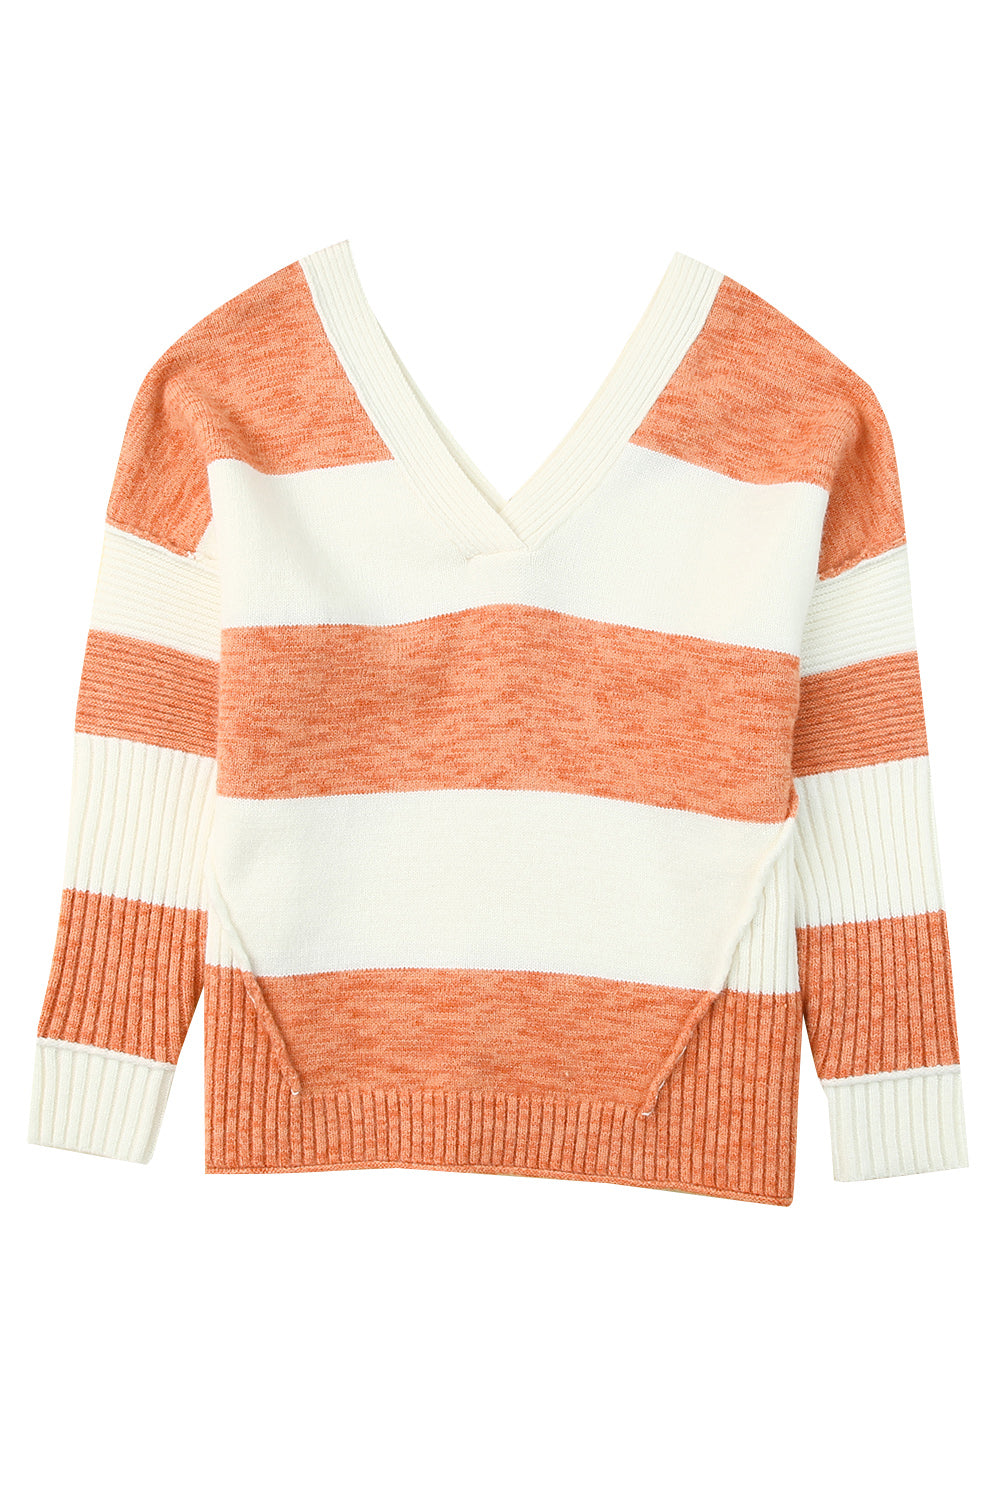 Stripe Striped V Neck Criss Cross Back Sweater